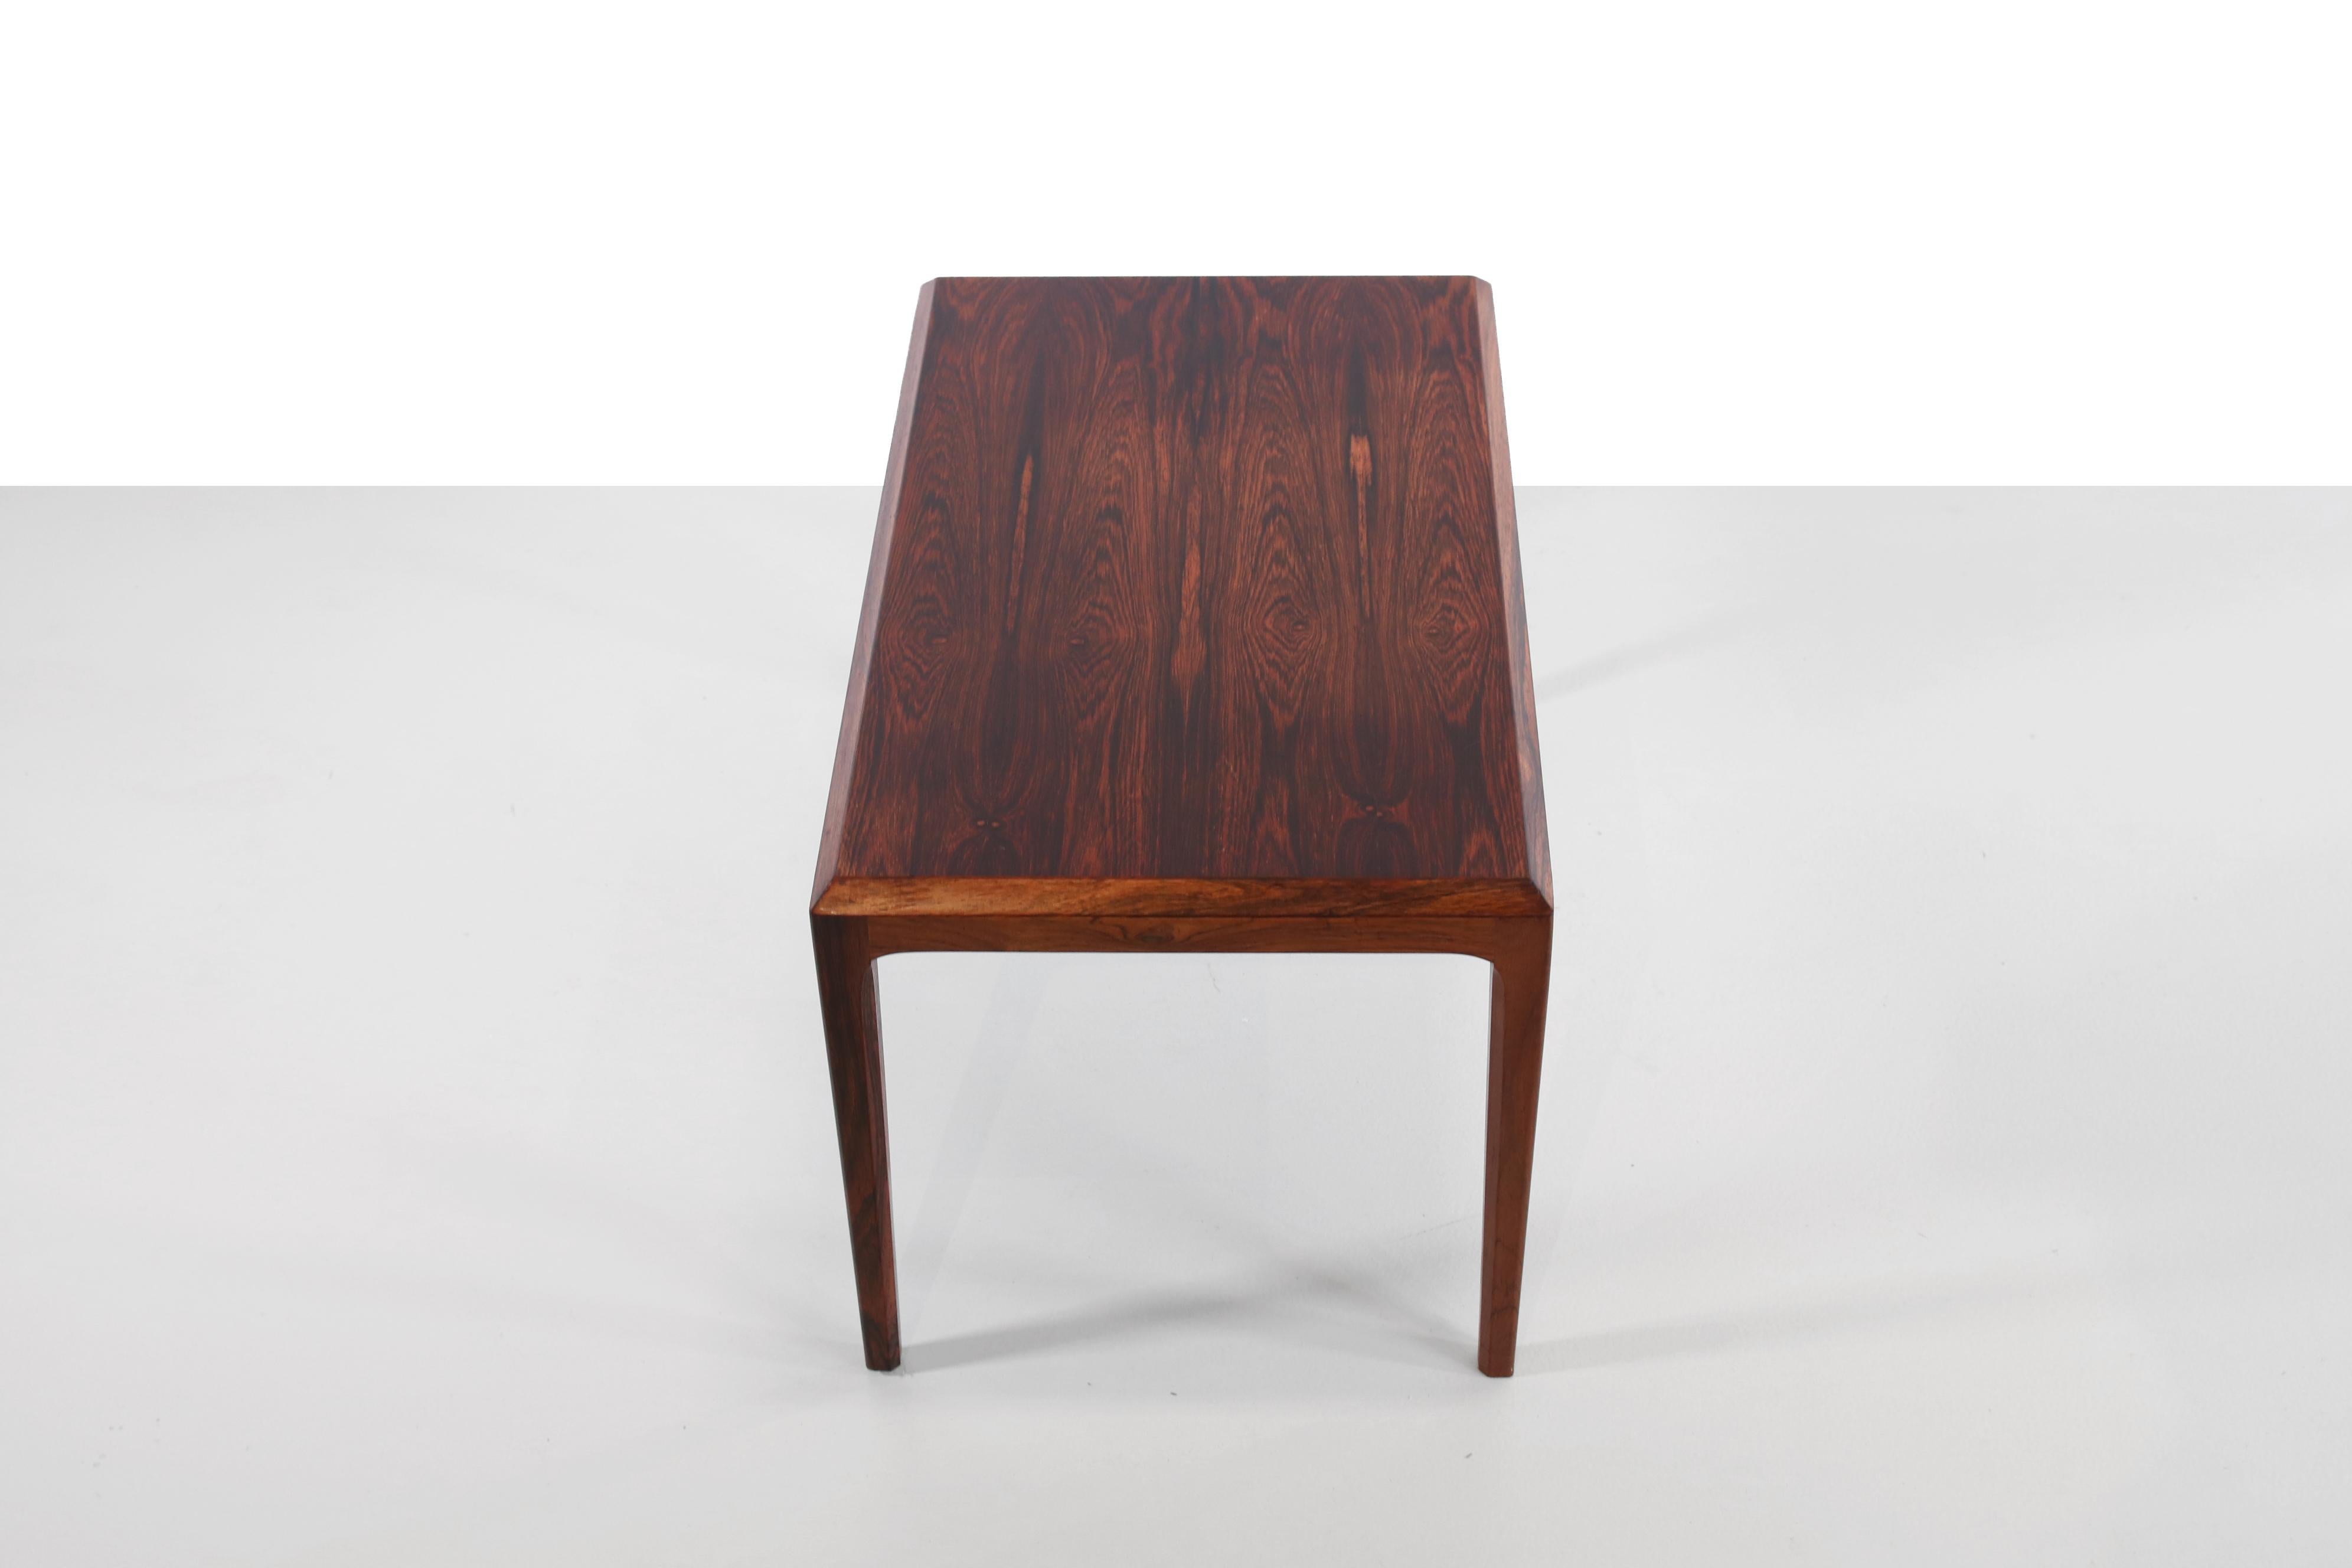 Scandinavian Modern Wooden table by Johannes Andersen for CFC Silkeborg Møbelfabrik